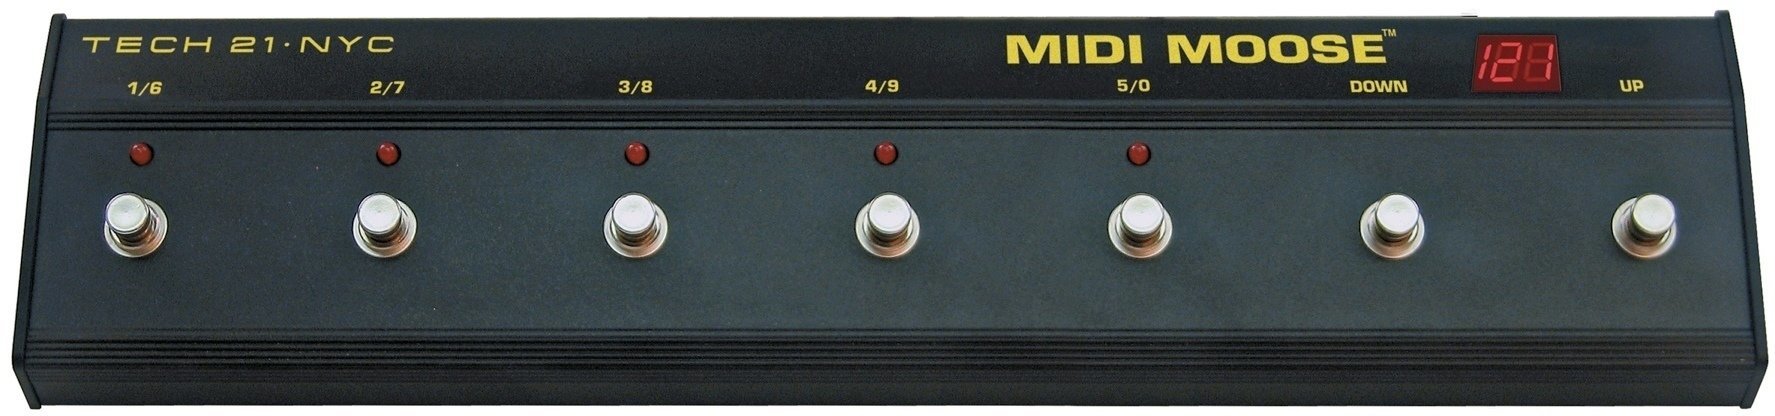 MIDI-controller Tech 21 MIDI Moose